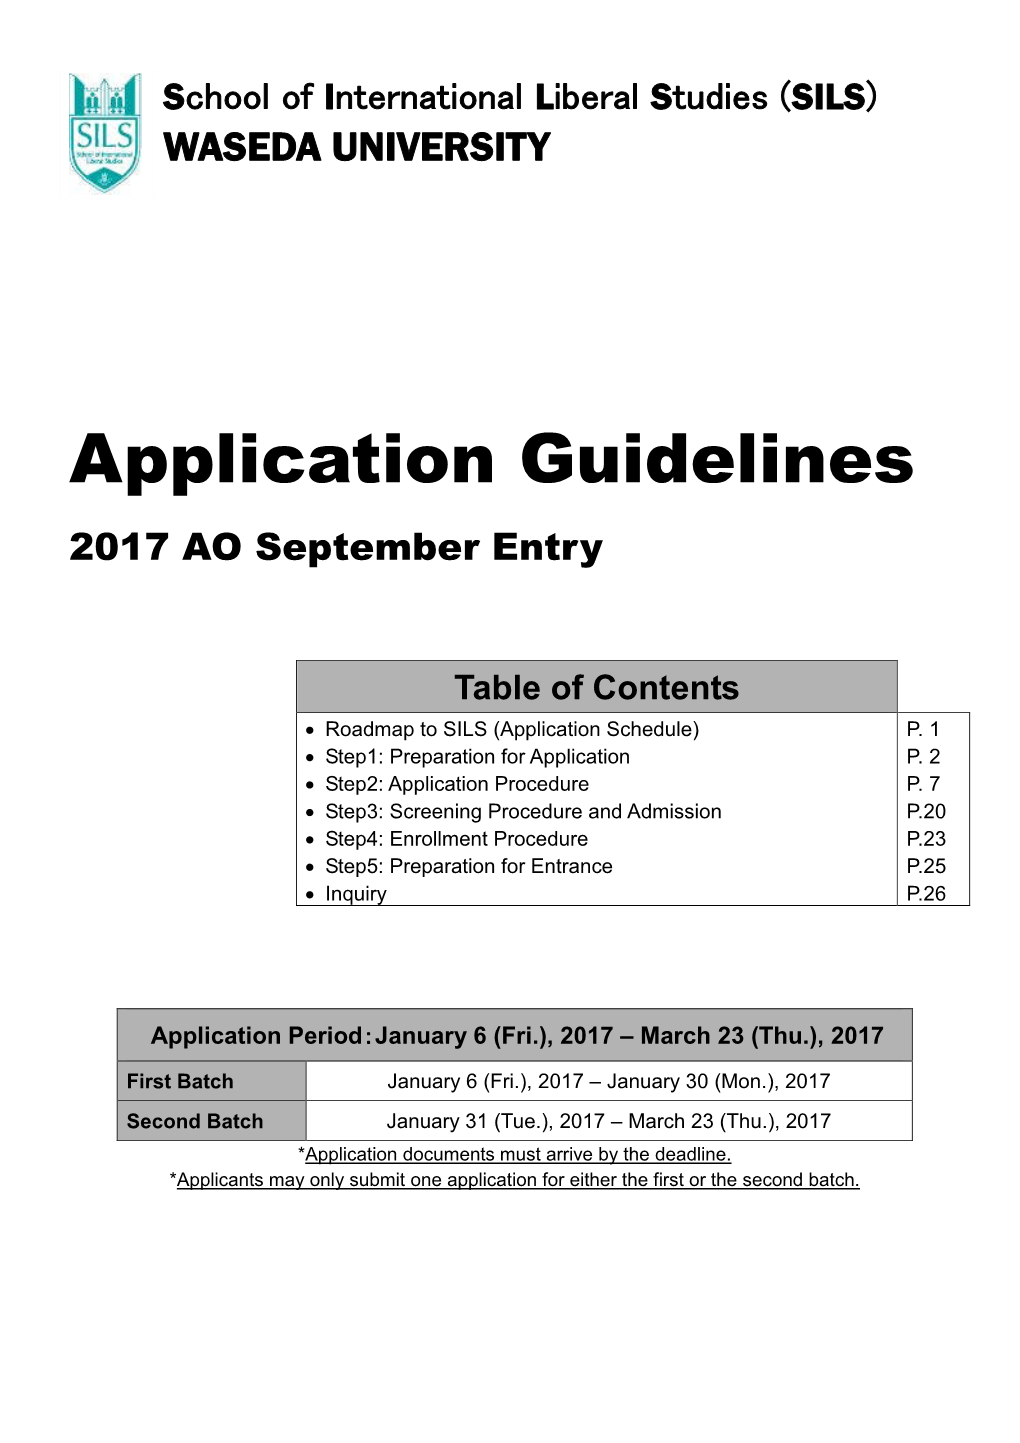 Application Guidelines 2017 AO September Entry